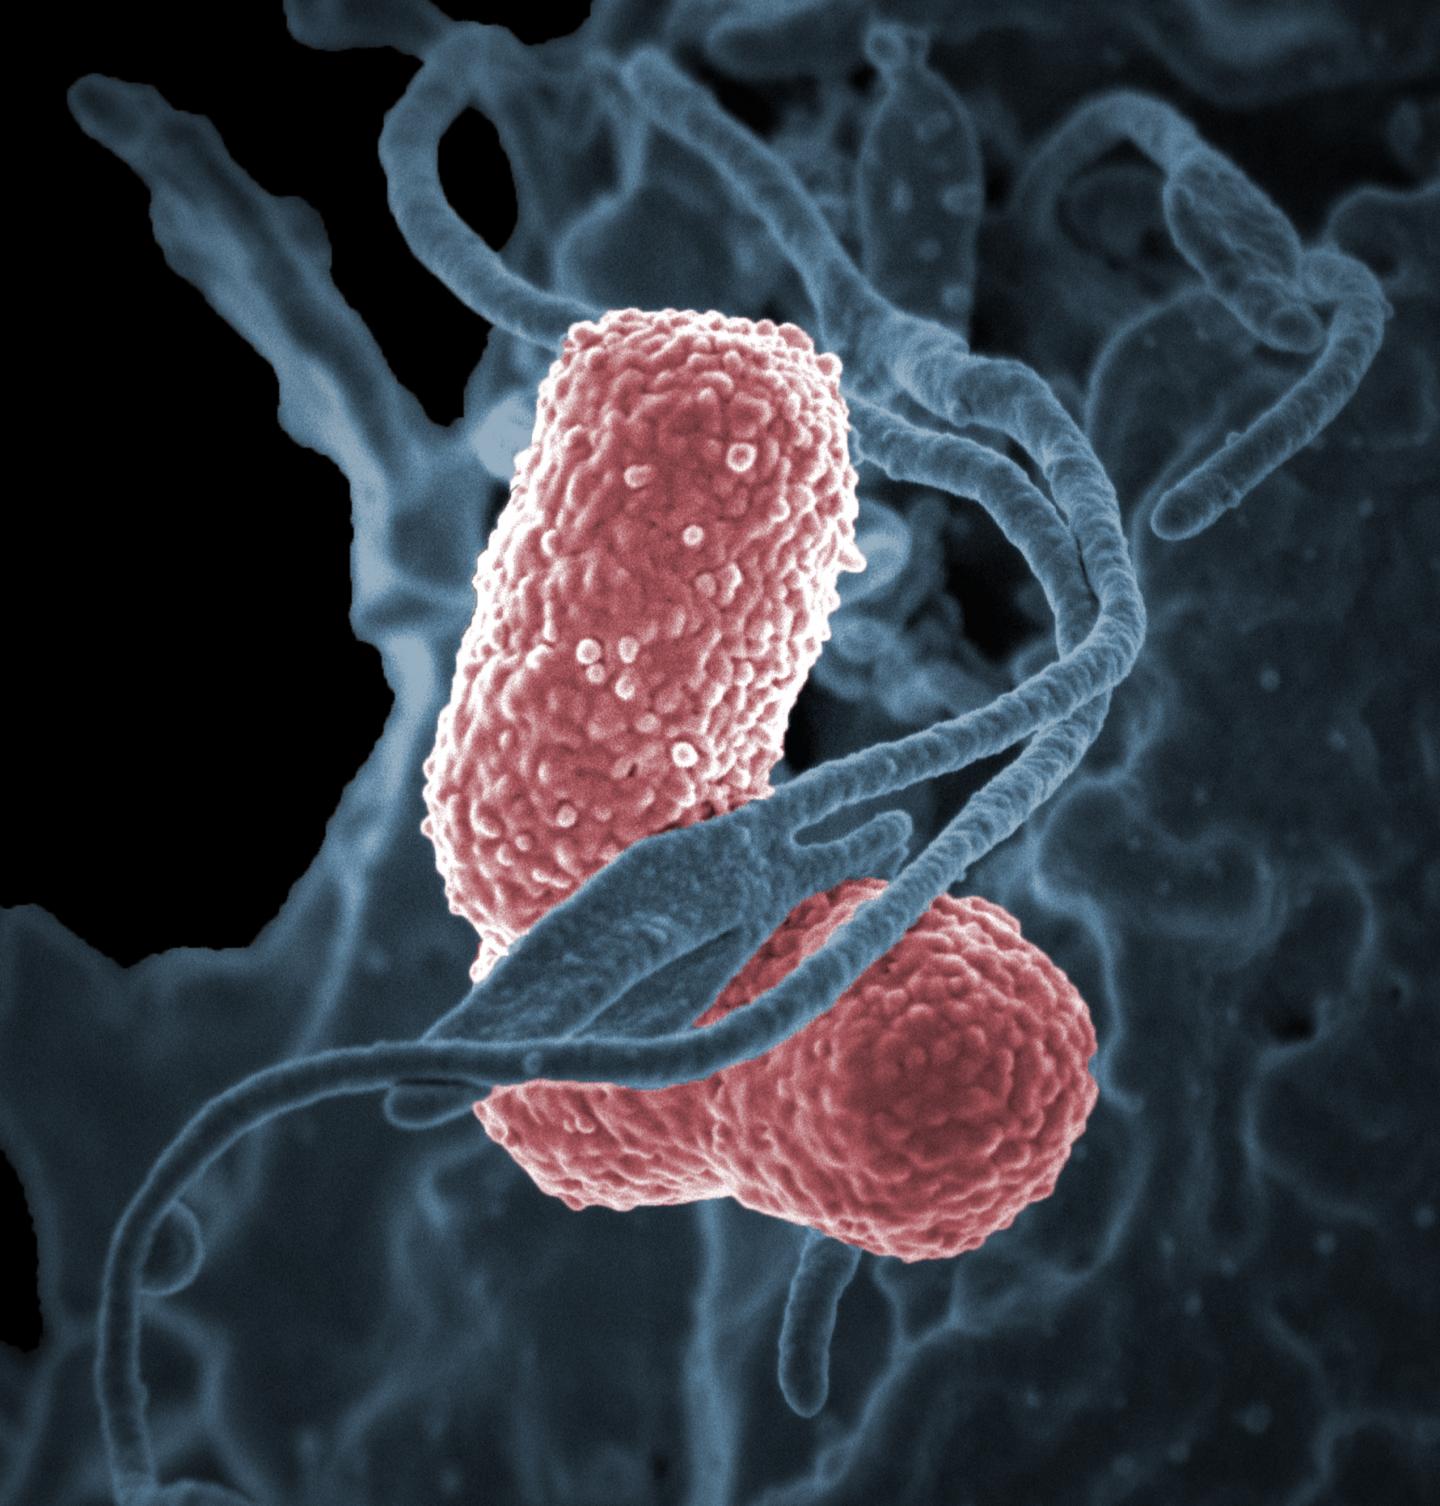 A human neutrophil interacting with Klebsiella pneumoniae